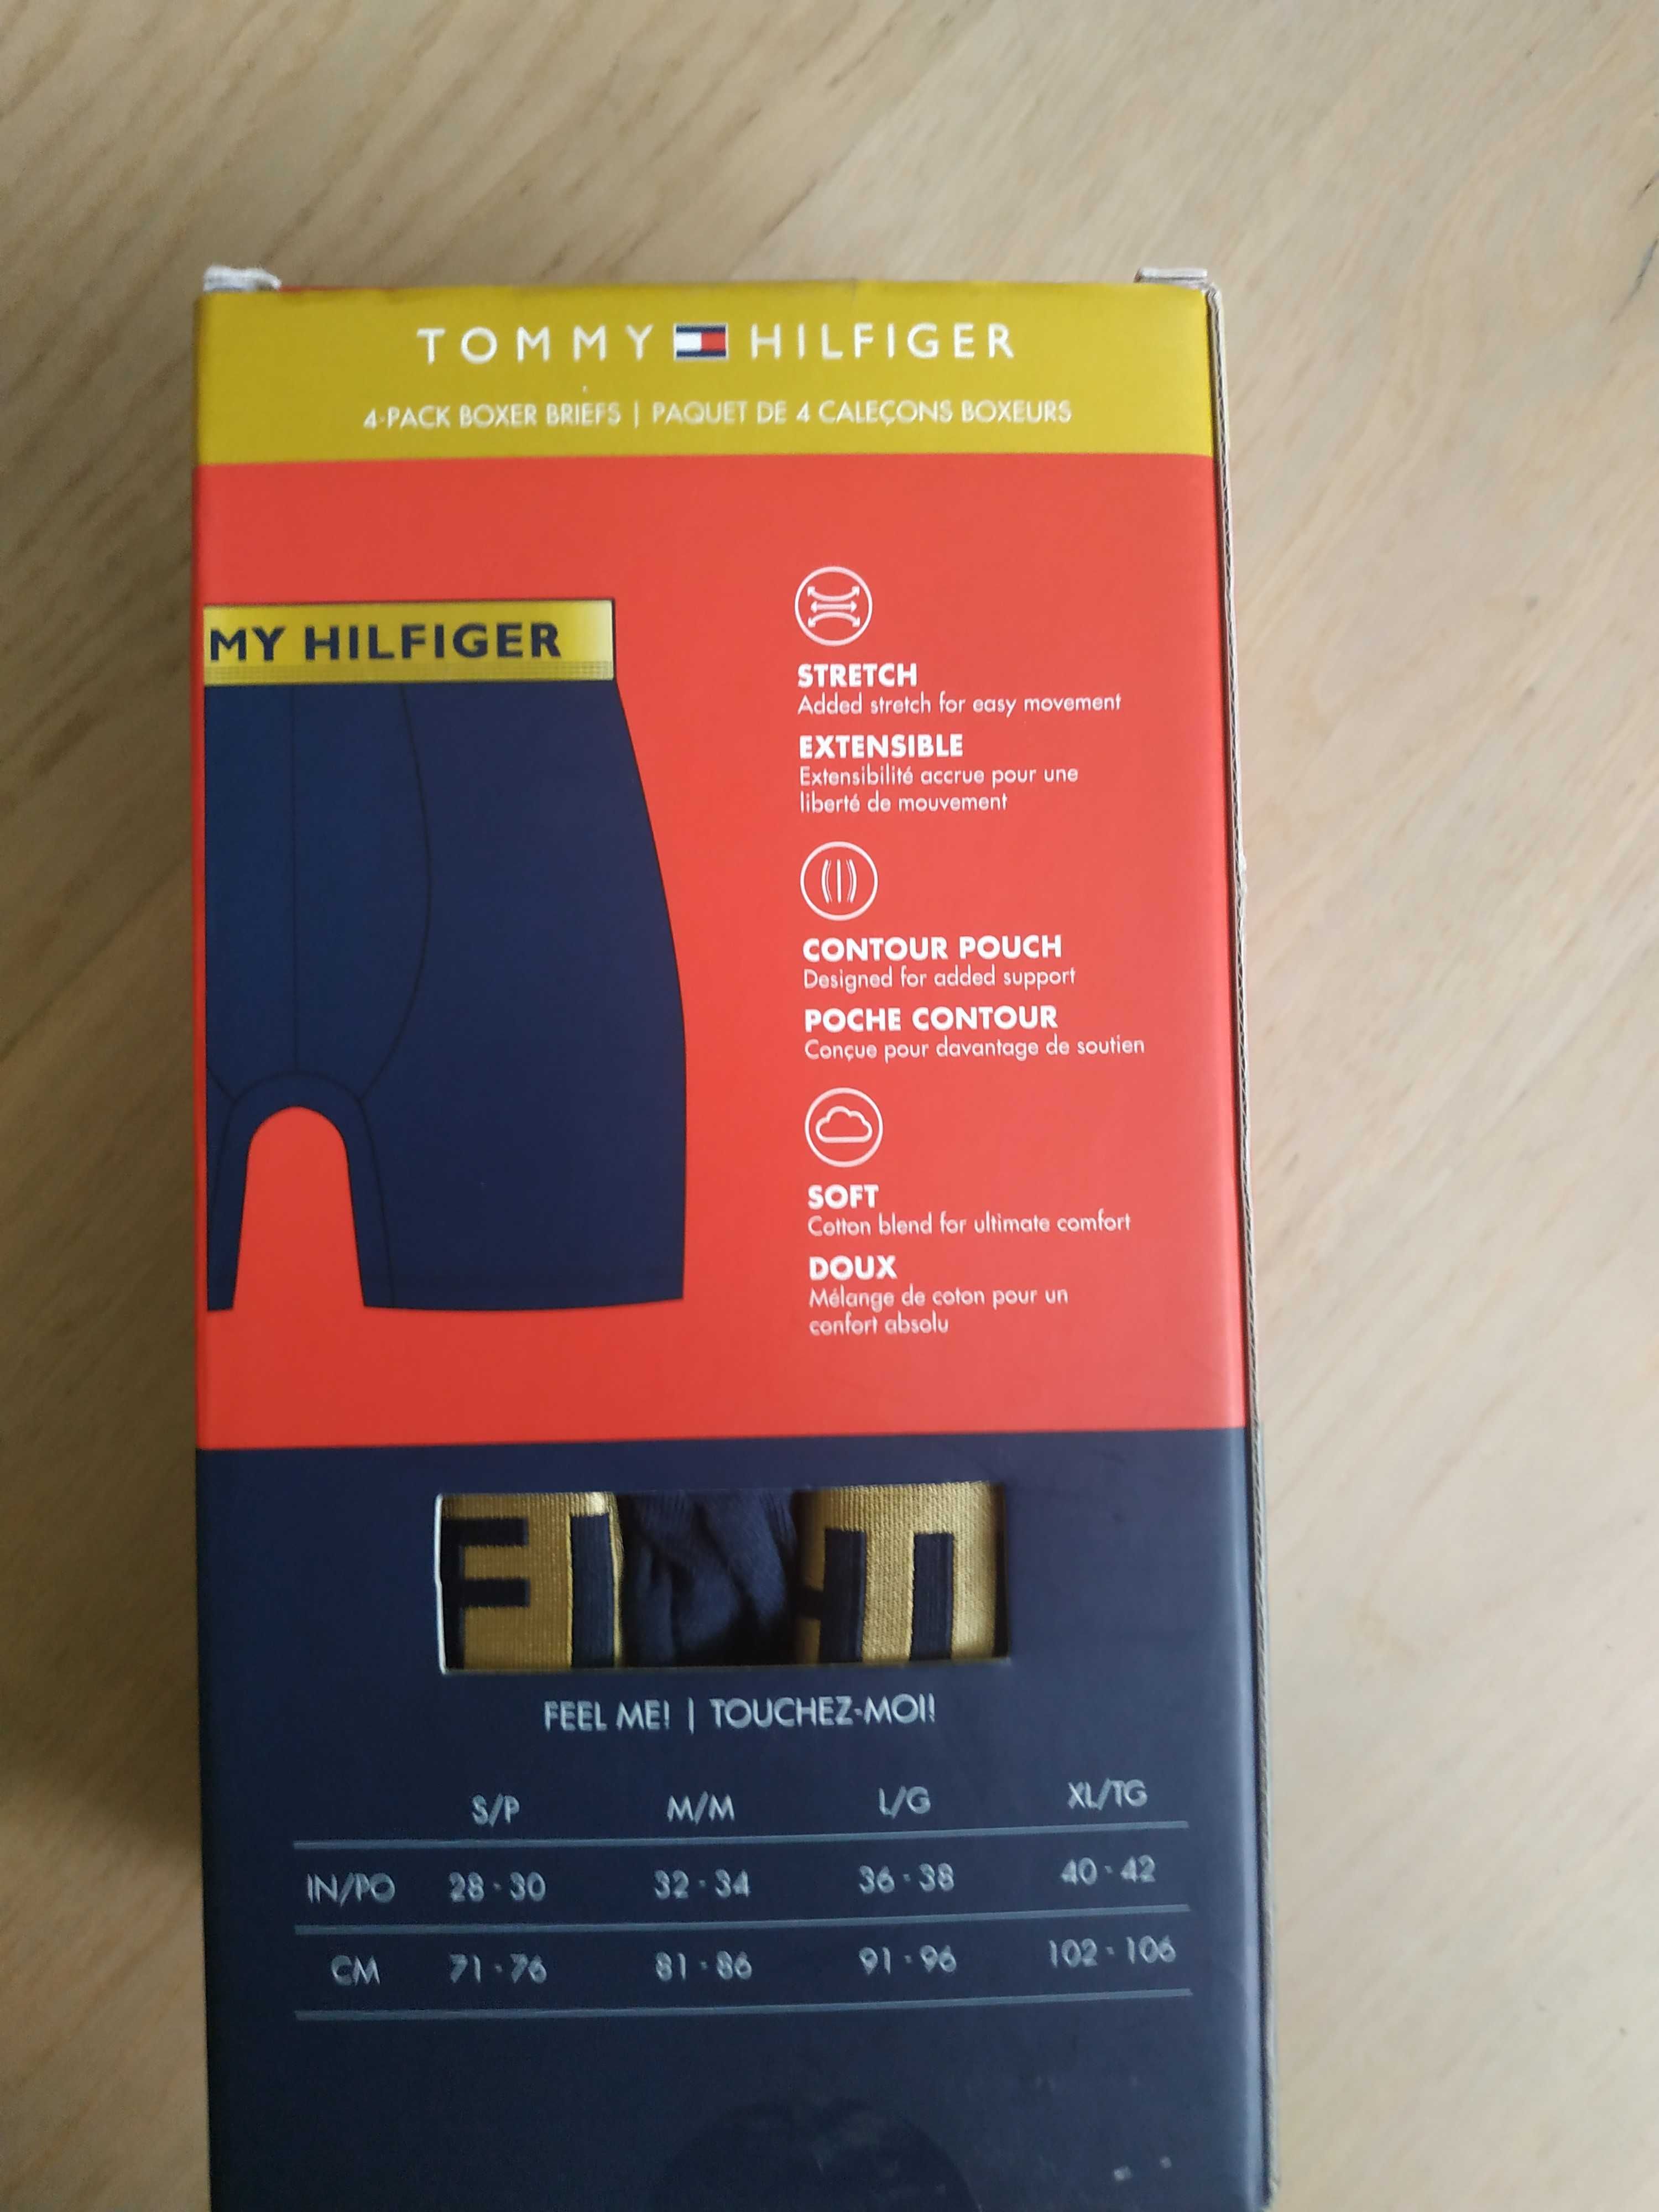 Bokserki Tommy Hilfiger  XL/TG  zestaw